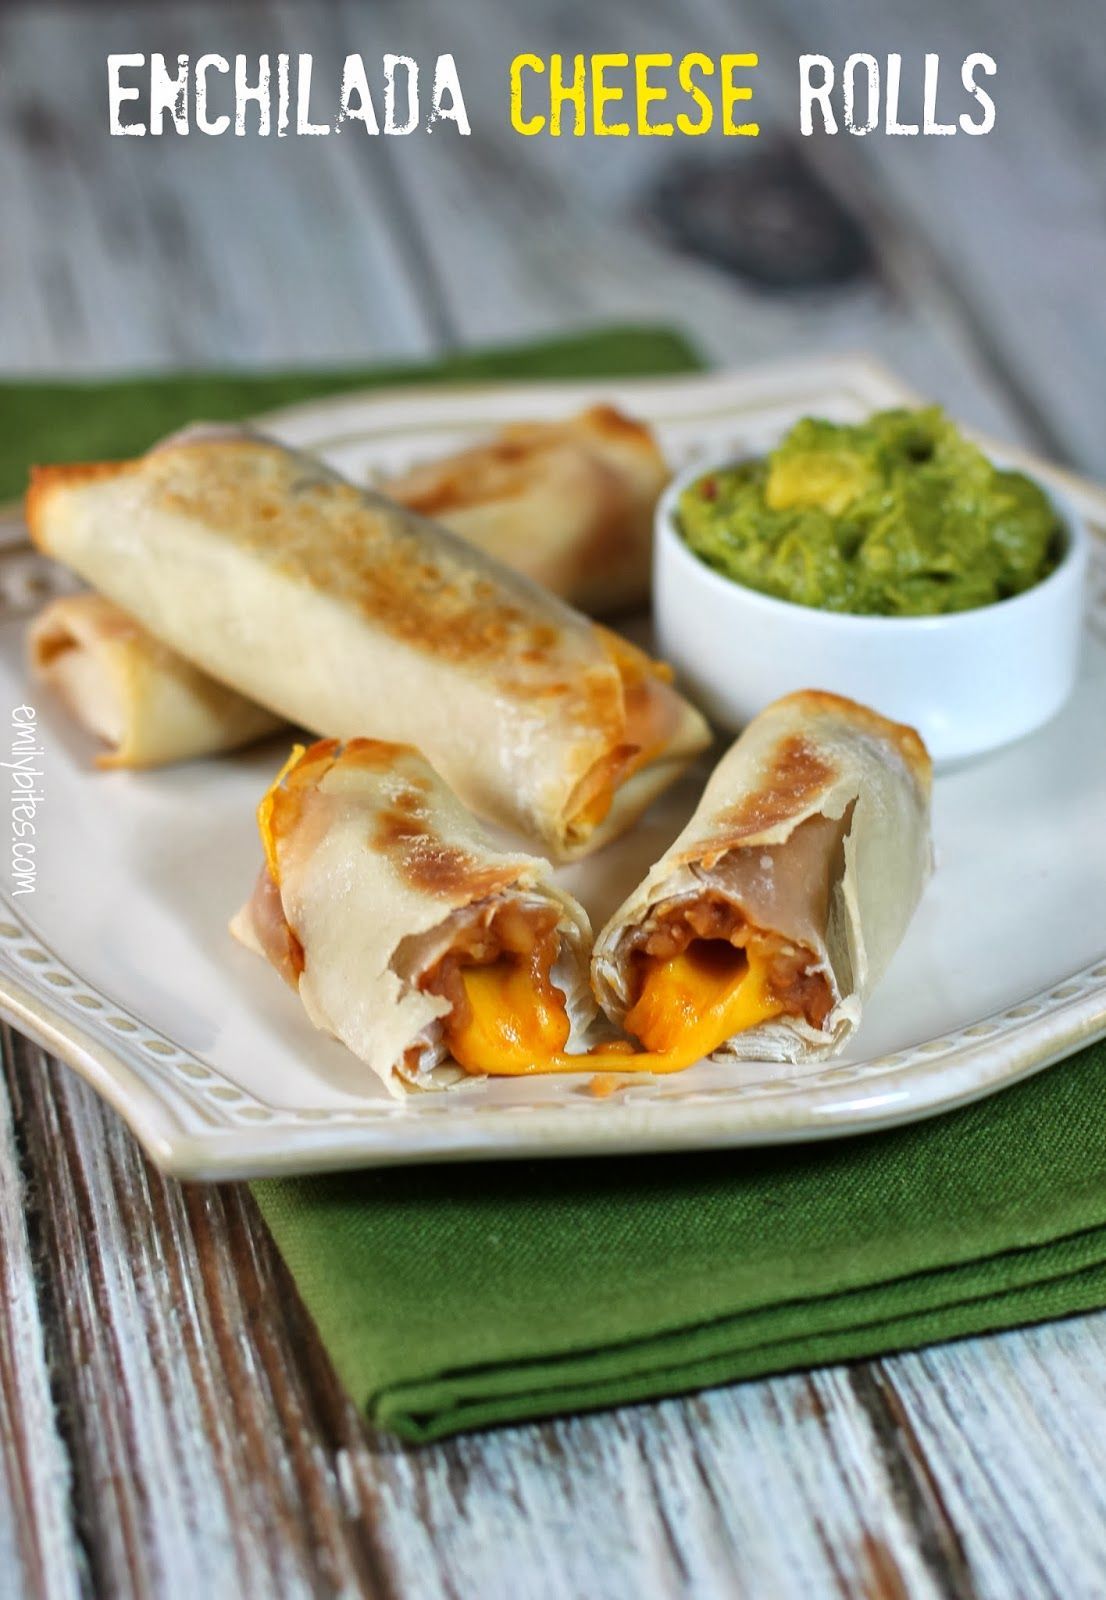 Emily Bites – Weight Watchers Friendly Recipes: Enchilada Cheese Rolls